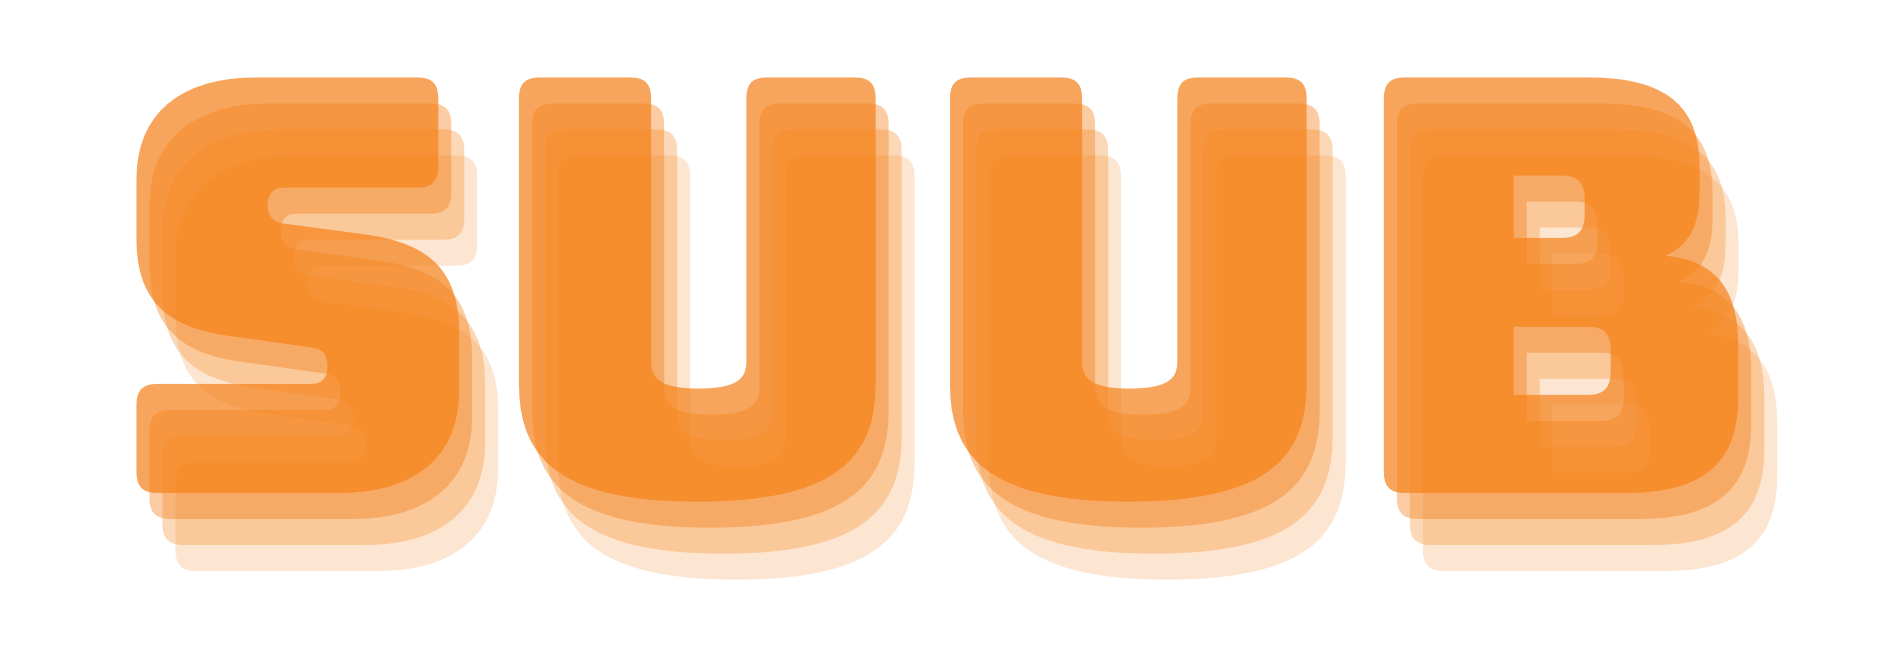 pubsub logo